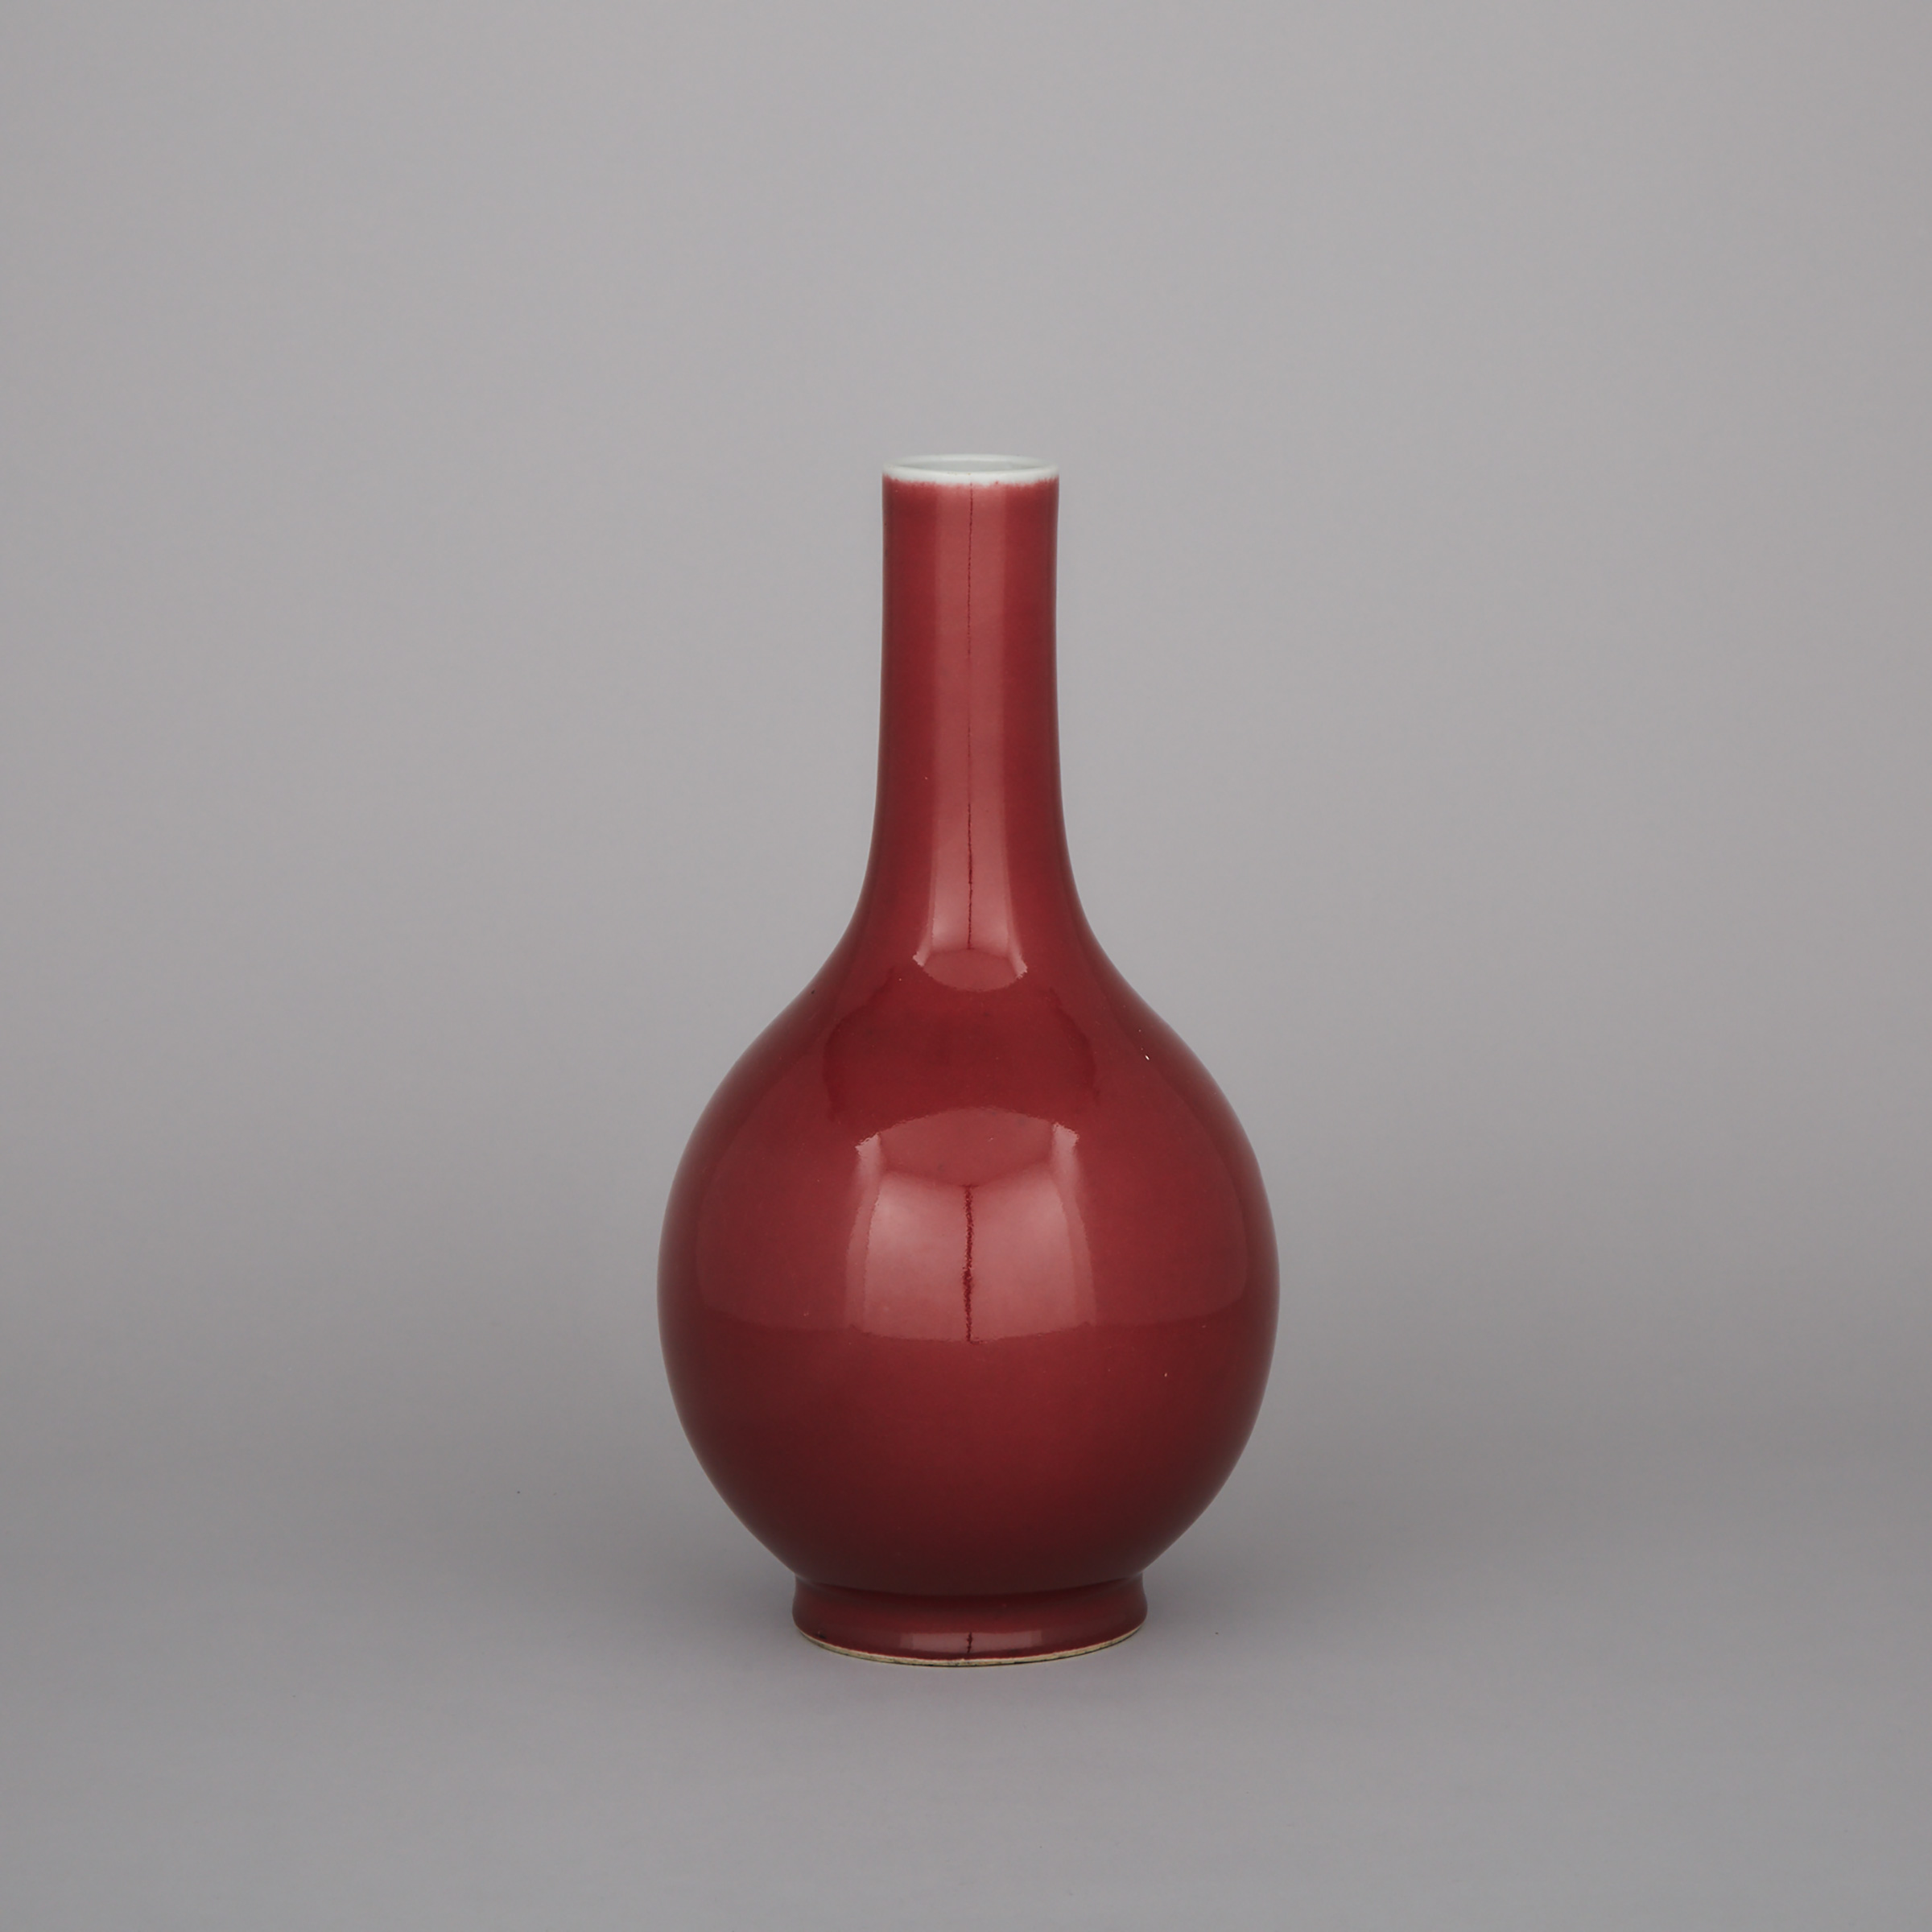 A Copper Red Bottle Vase, 19th Century